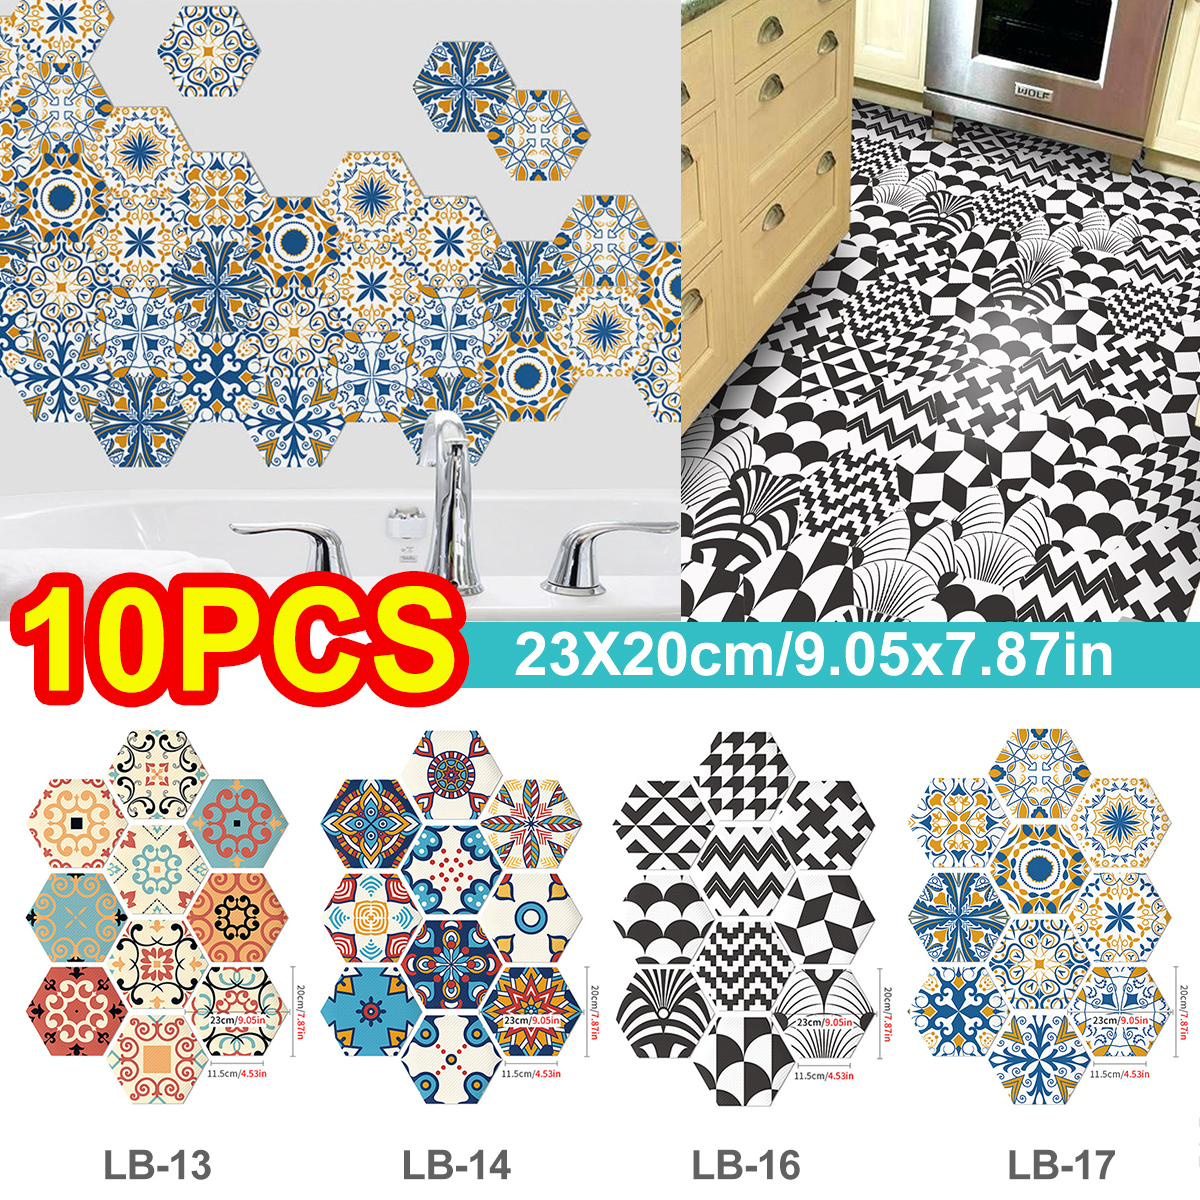 Hexagonal-Floor-Stickers-Special-Shaped-Tile-Stickers-Self-Adhesive-Bathroom-Toilet-Waterproof-And-W-1859007-1